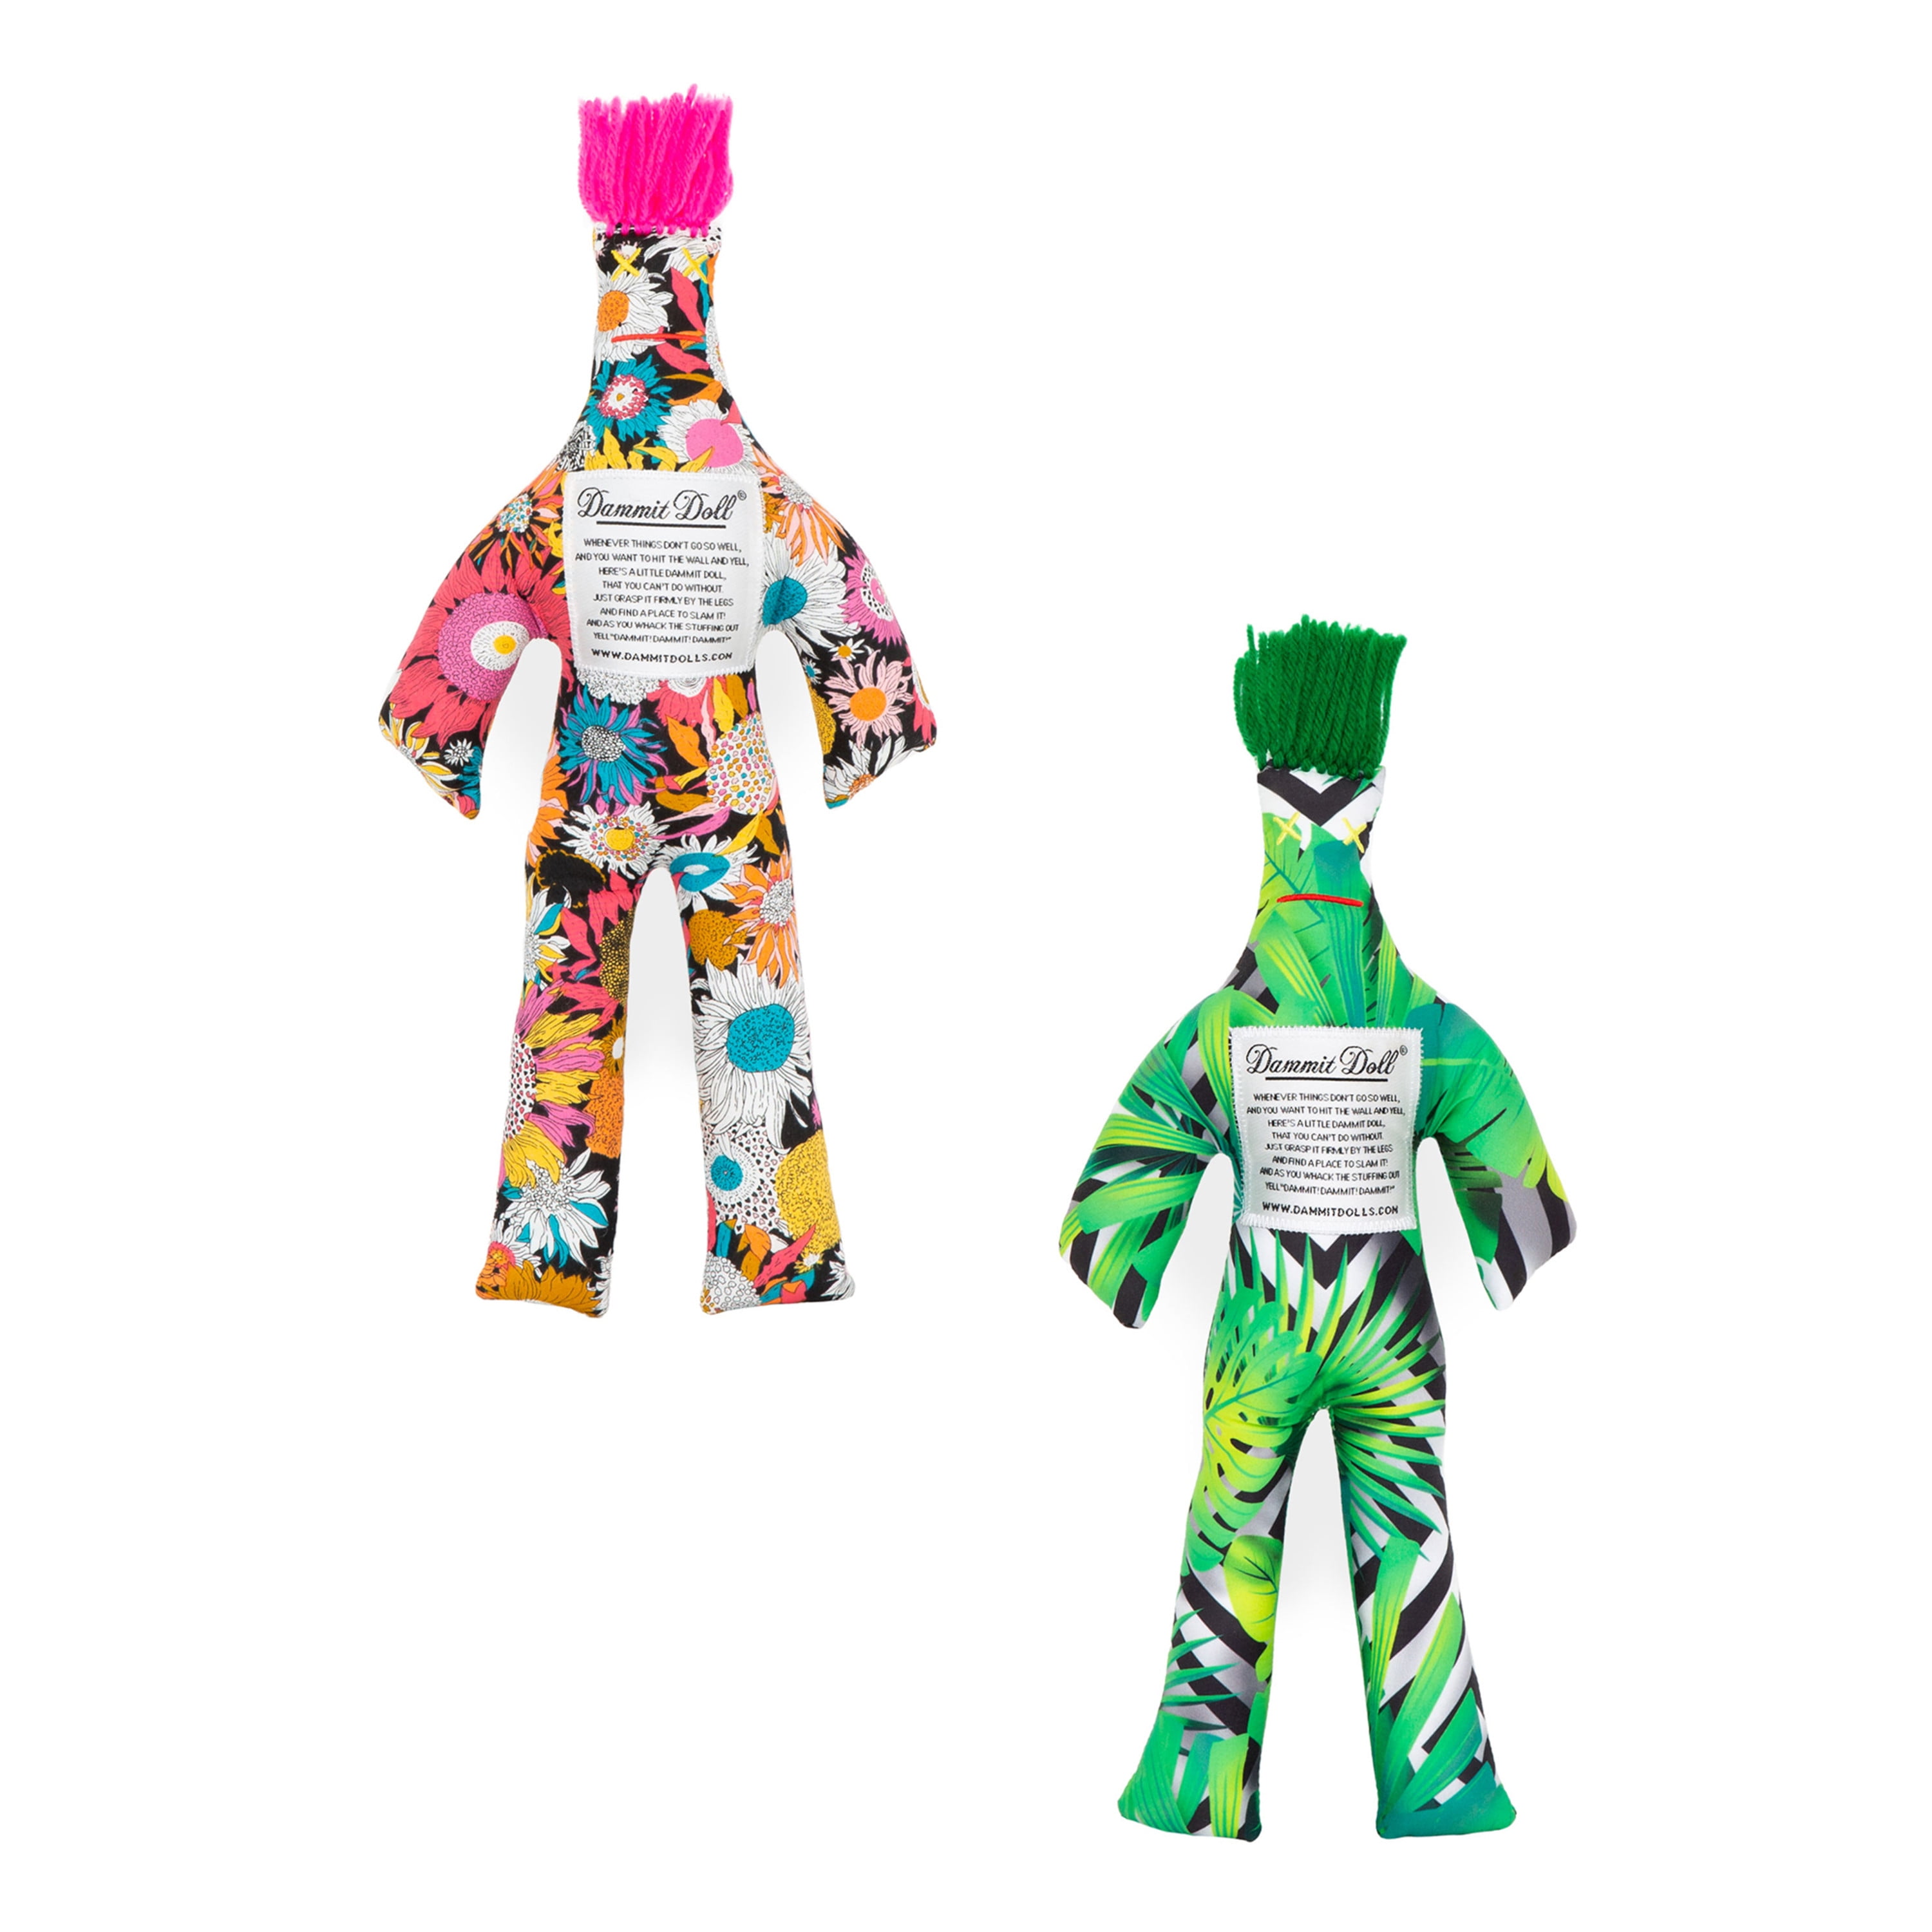  Dammit Doll - Sexy Six Dolls - Set of Six Random Stress Relief  - Gag Gift : Toys & Games